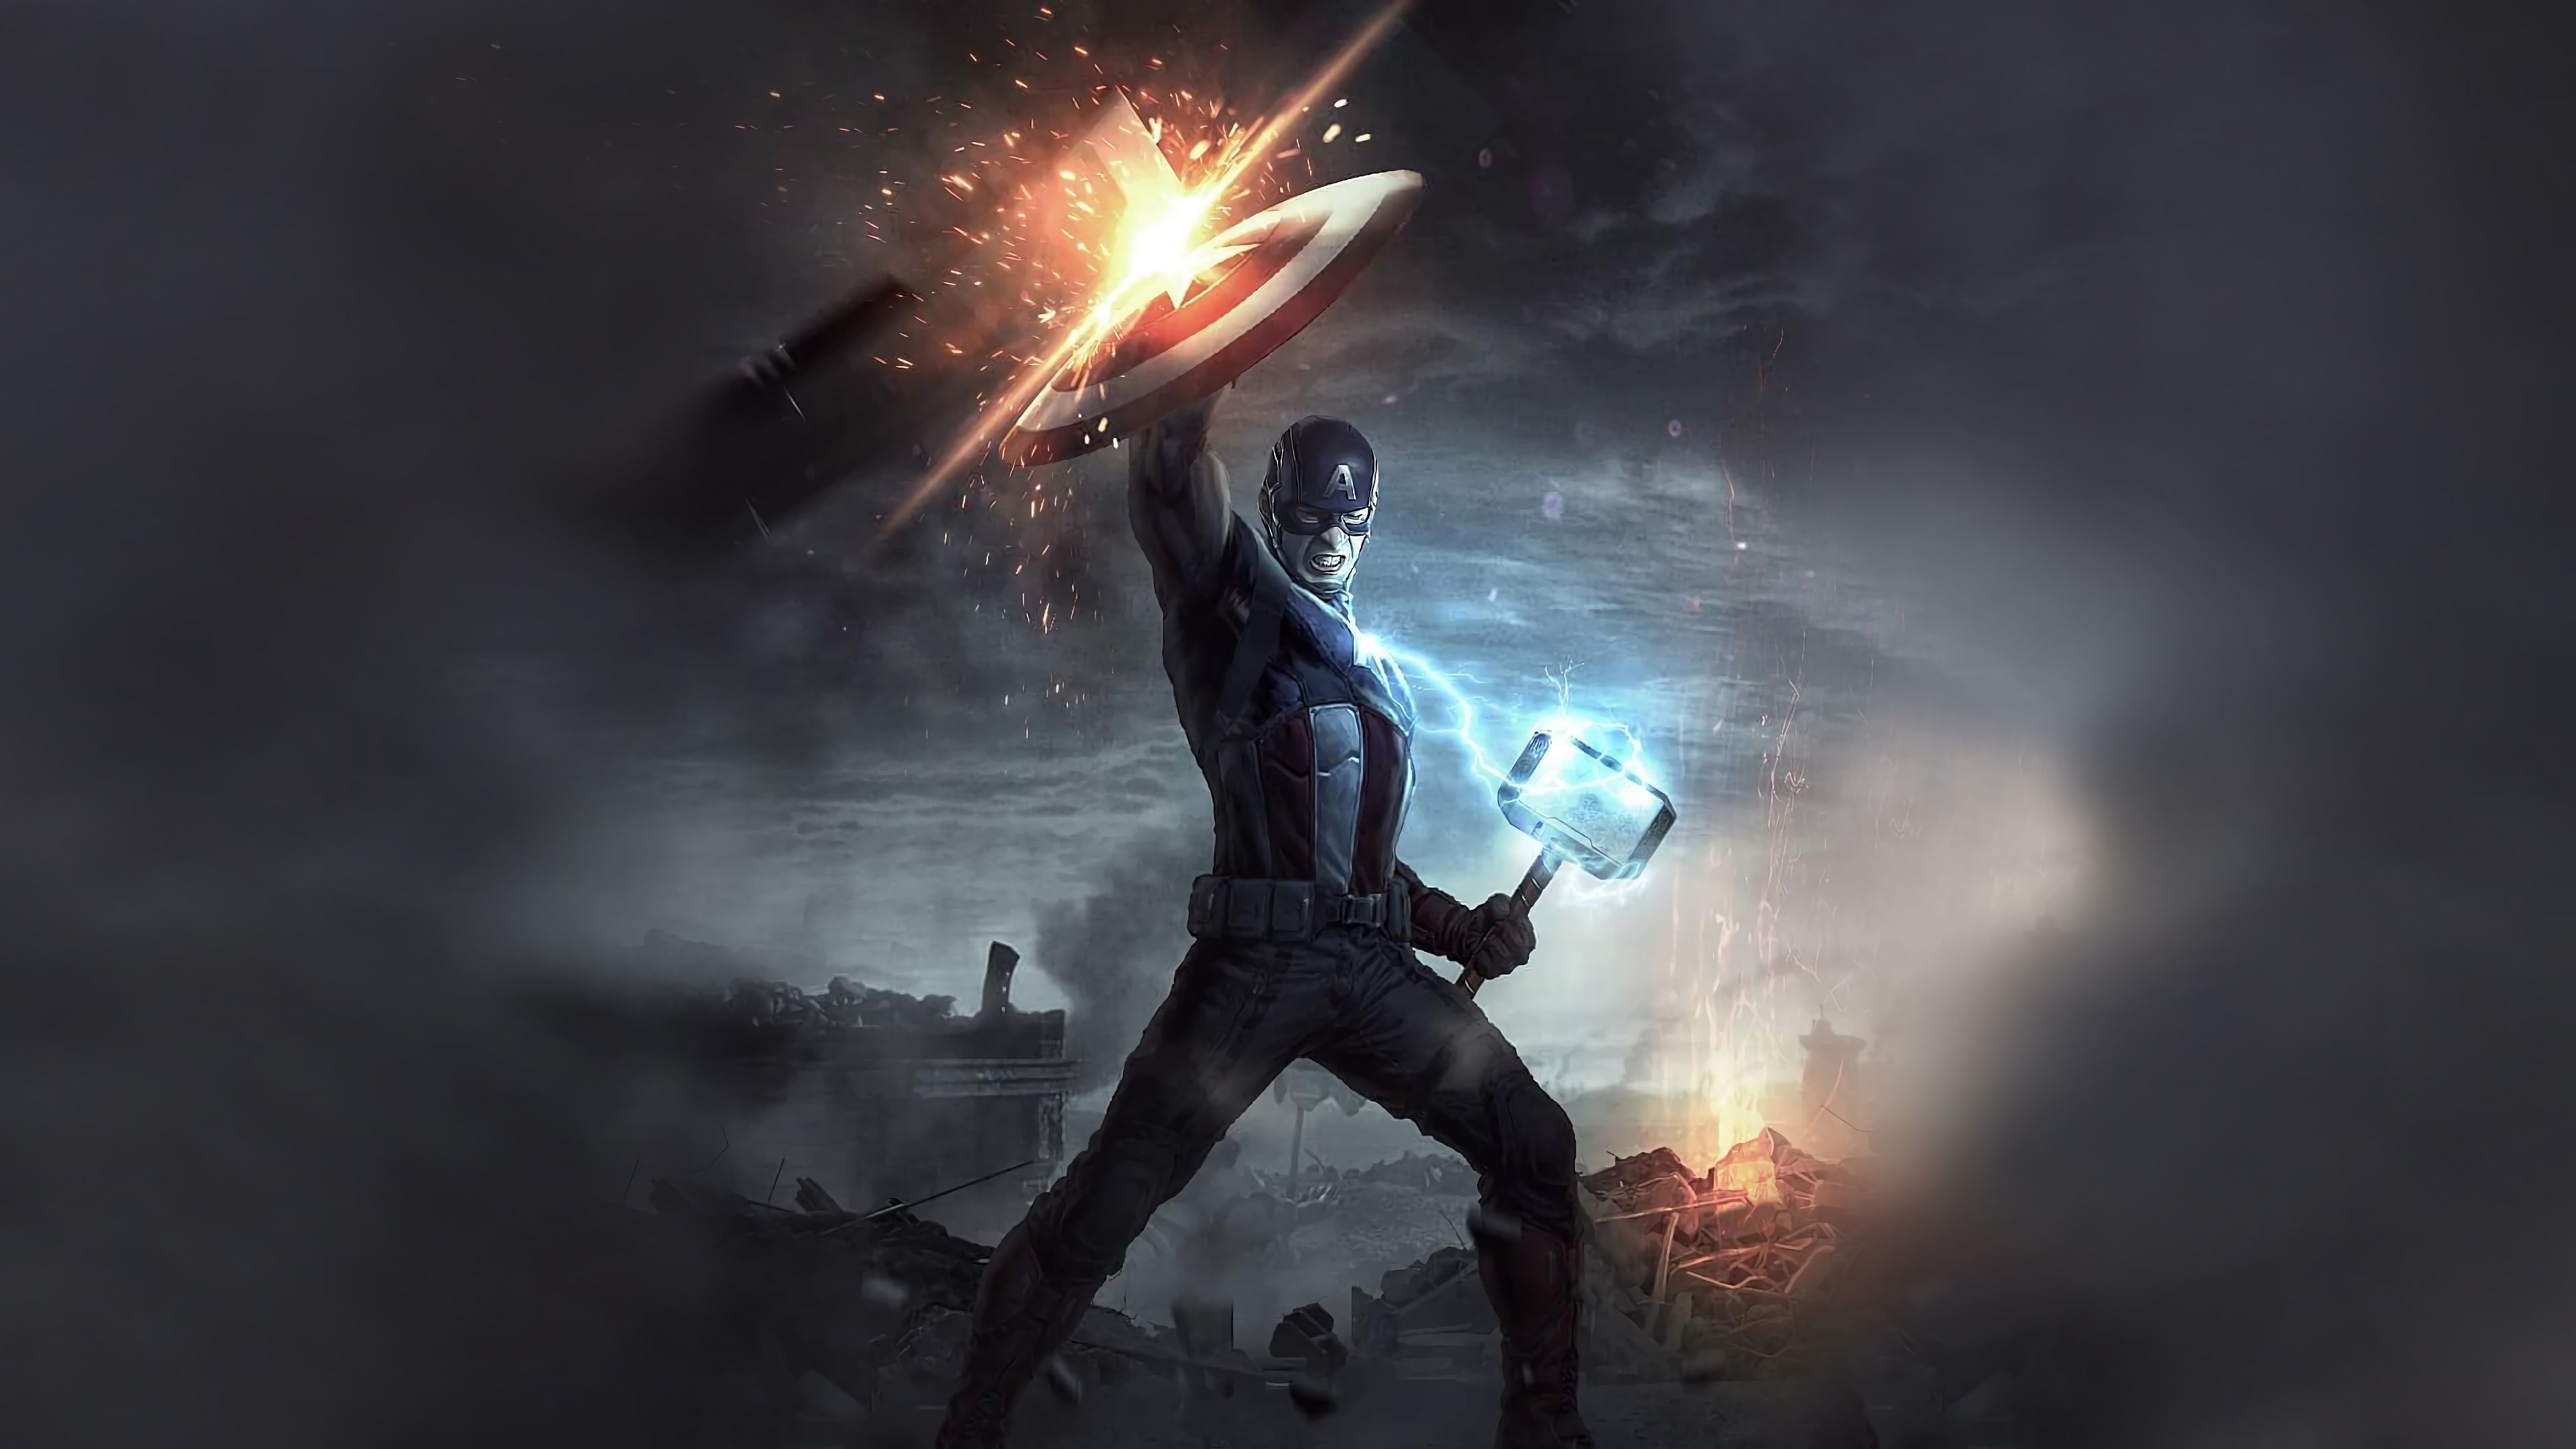 4K Captain America Mjolnir and Shield Wallpaper, HD Superheroes 4K Wallpape...